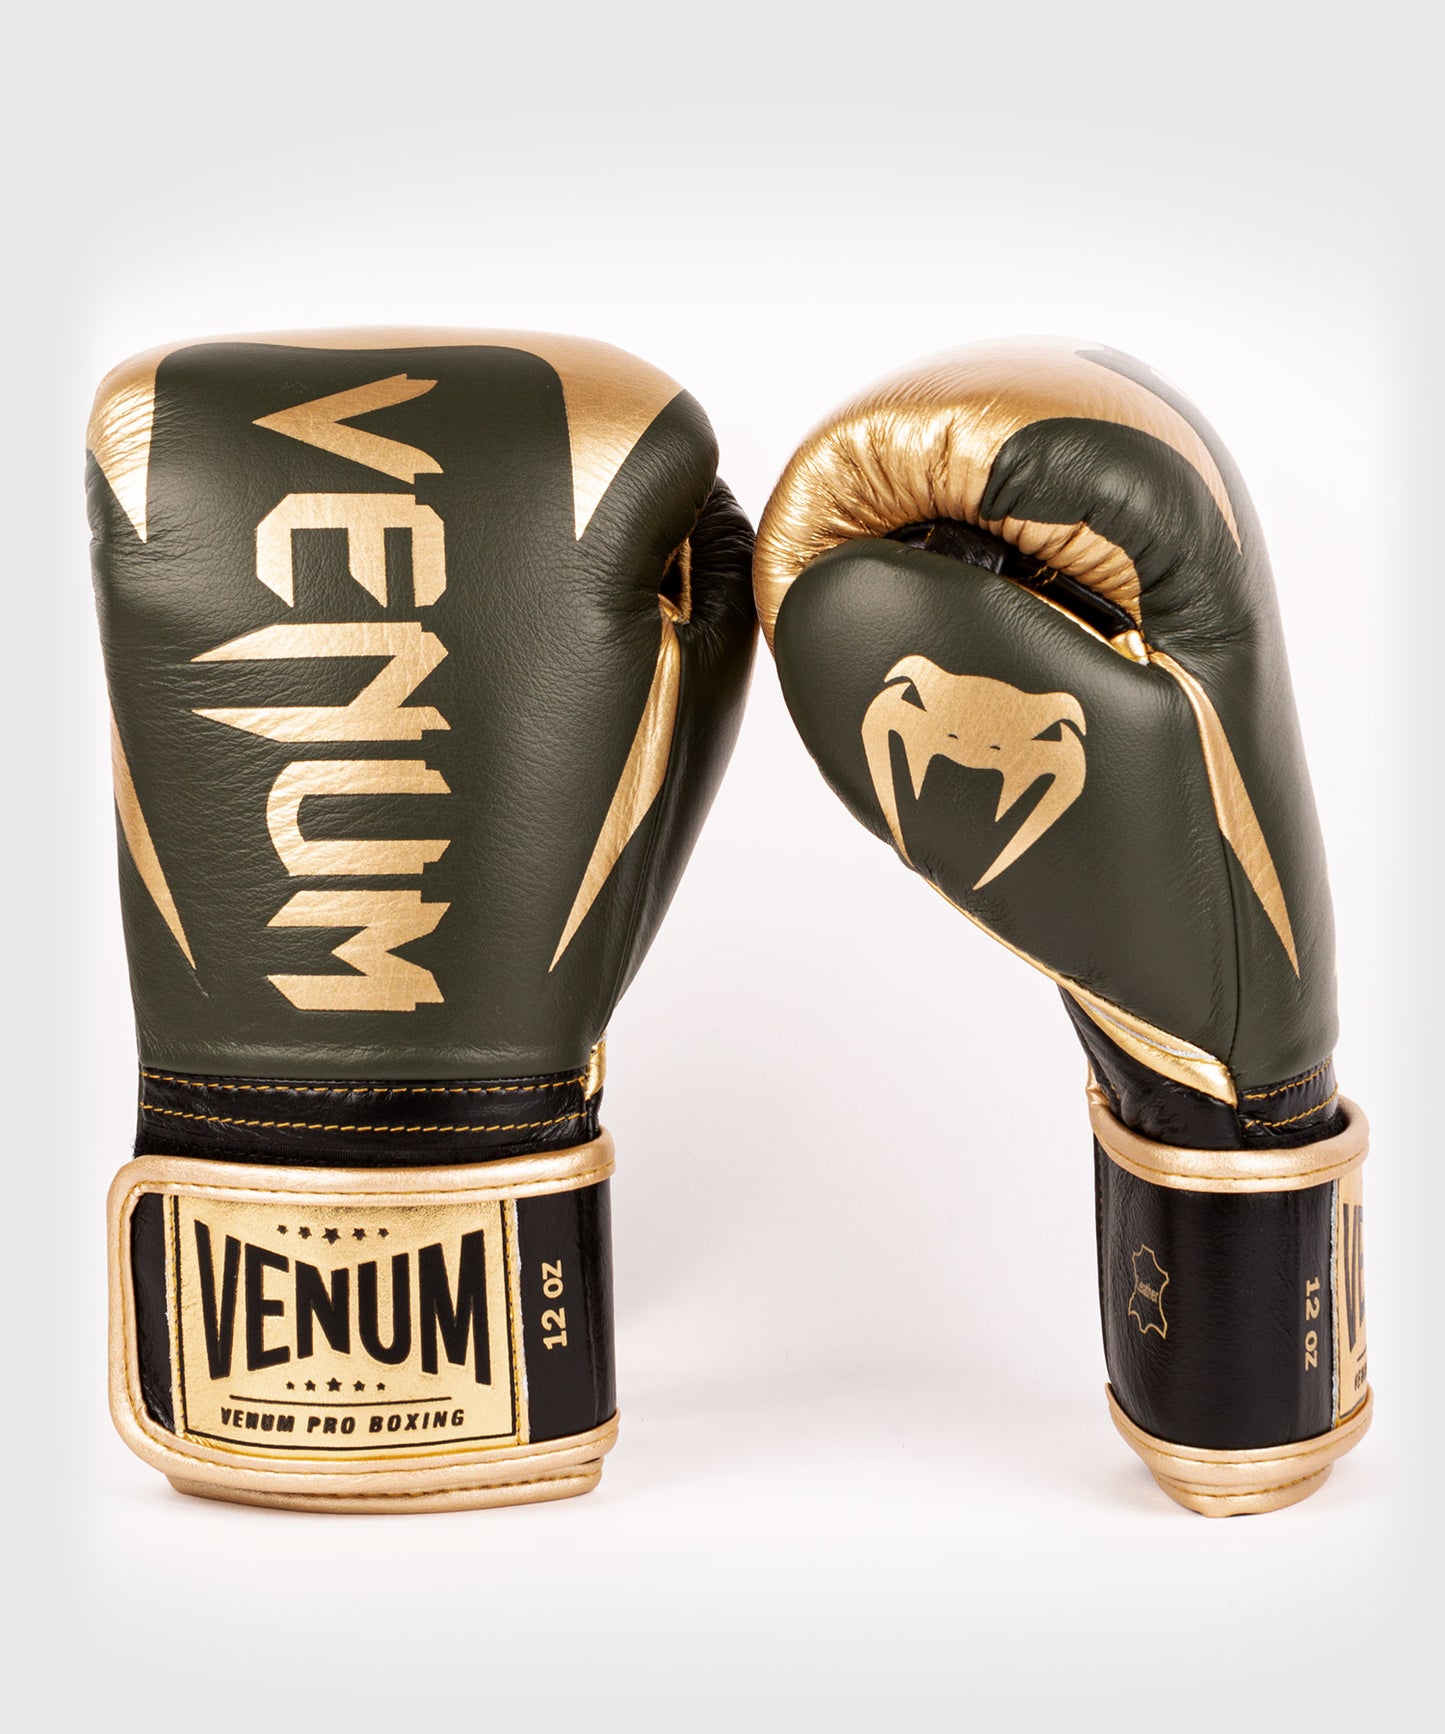 Venum Hammer professionelle Boxhandschuhe - Klettverschluss - Khaki/Gold